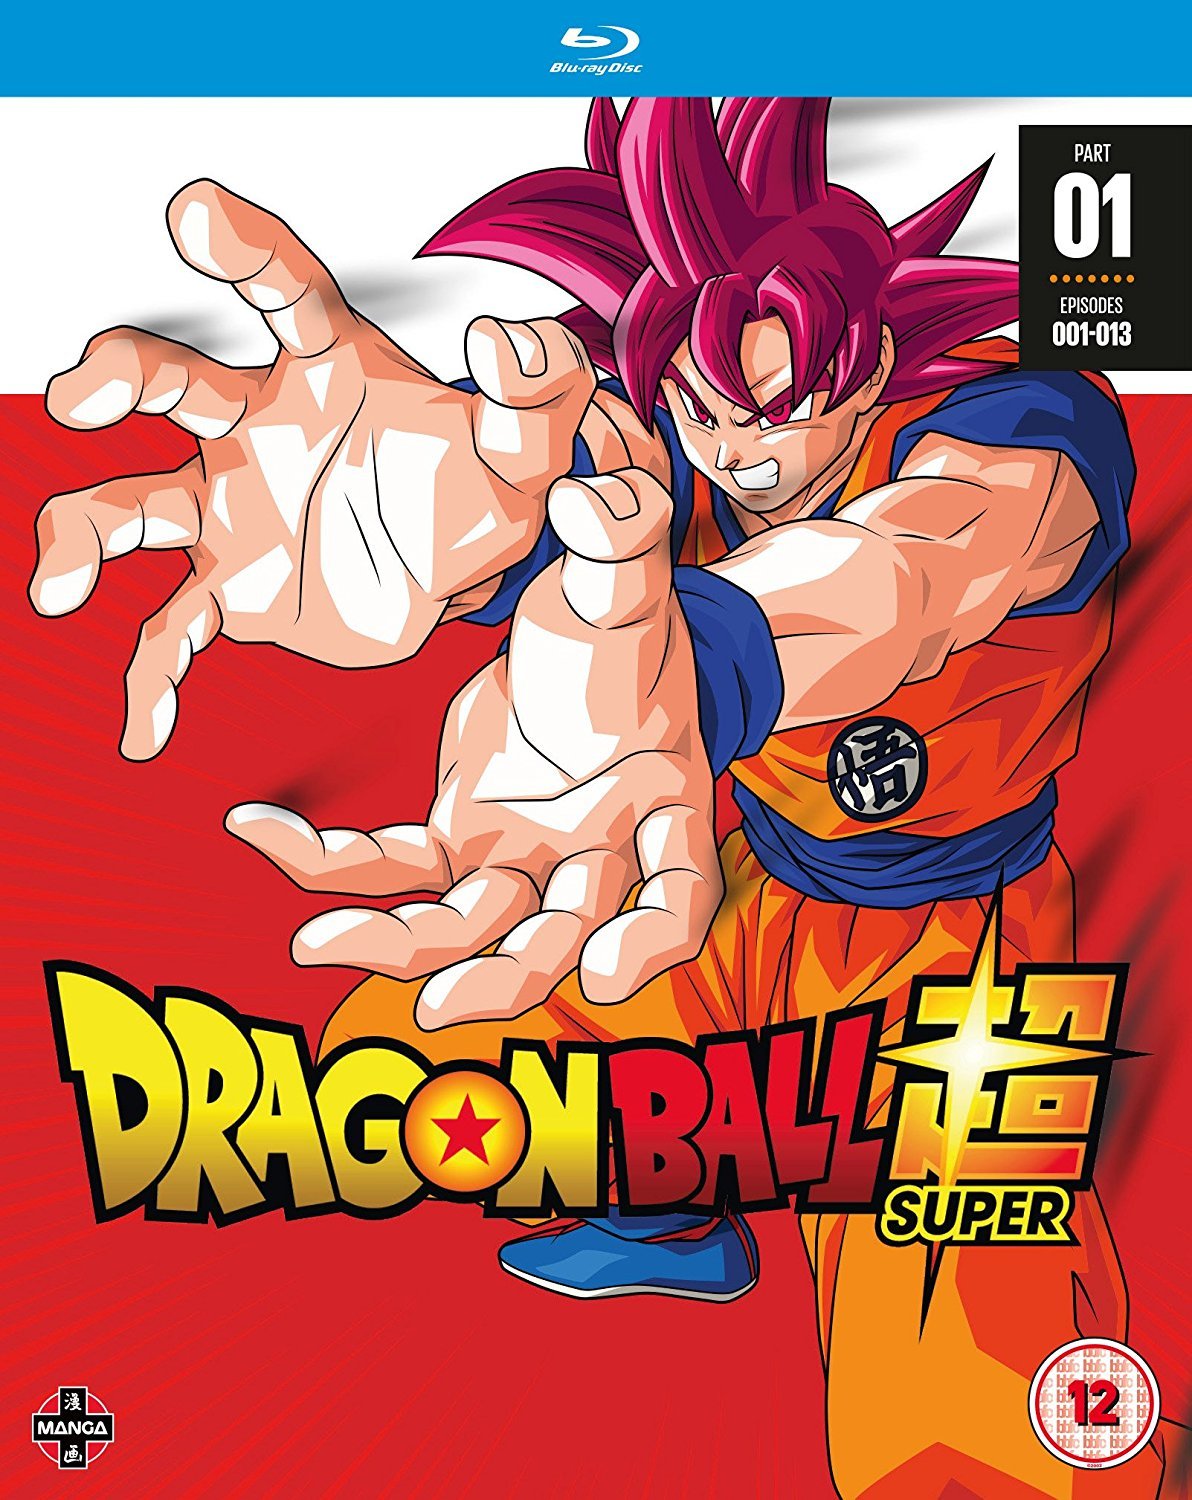 Dragon Ball Super Episode 88 Review